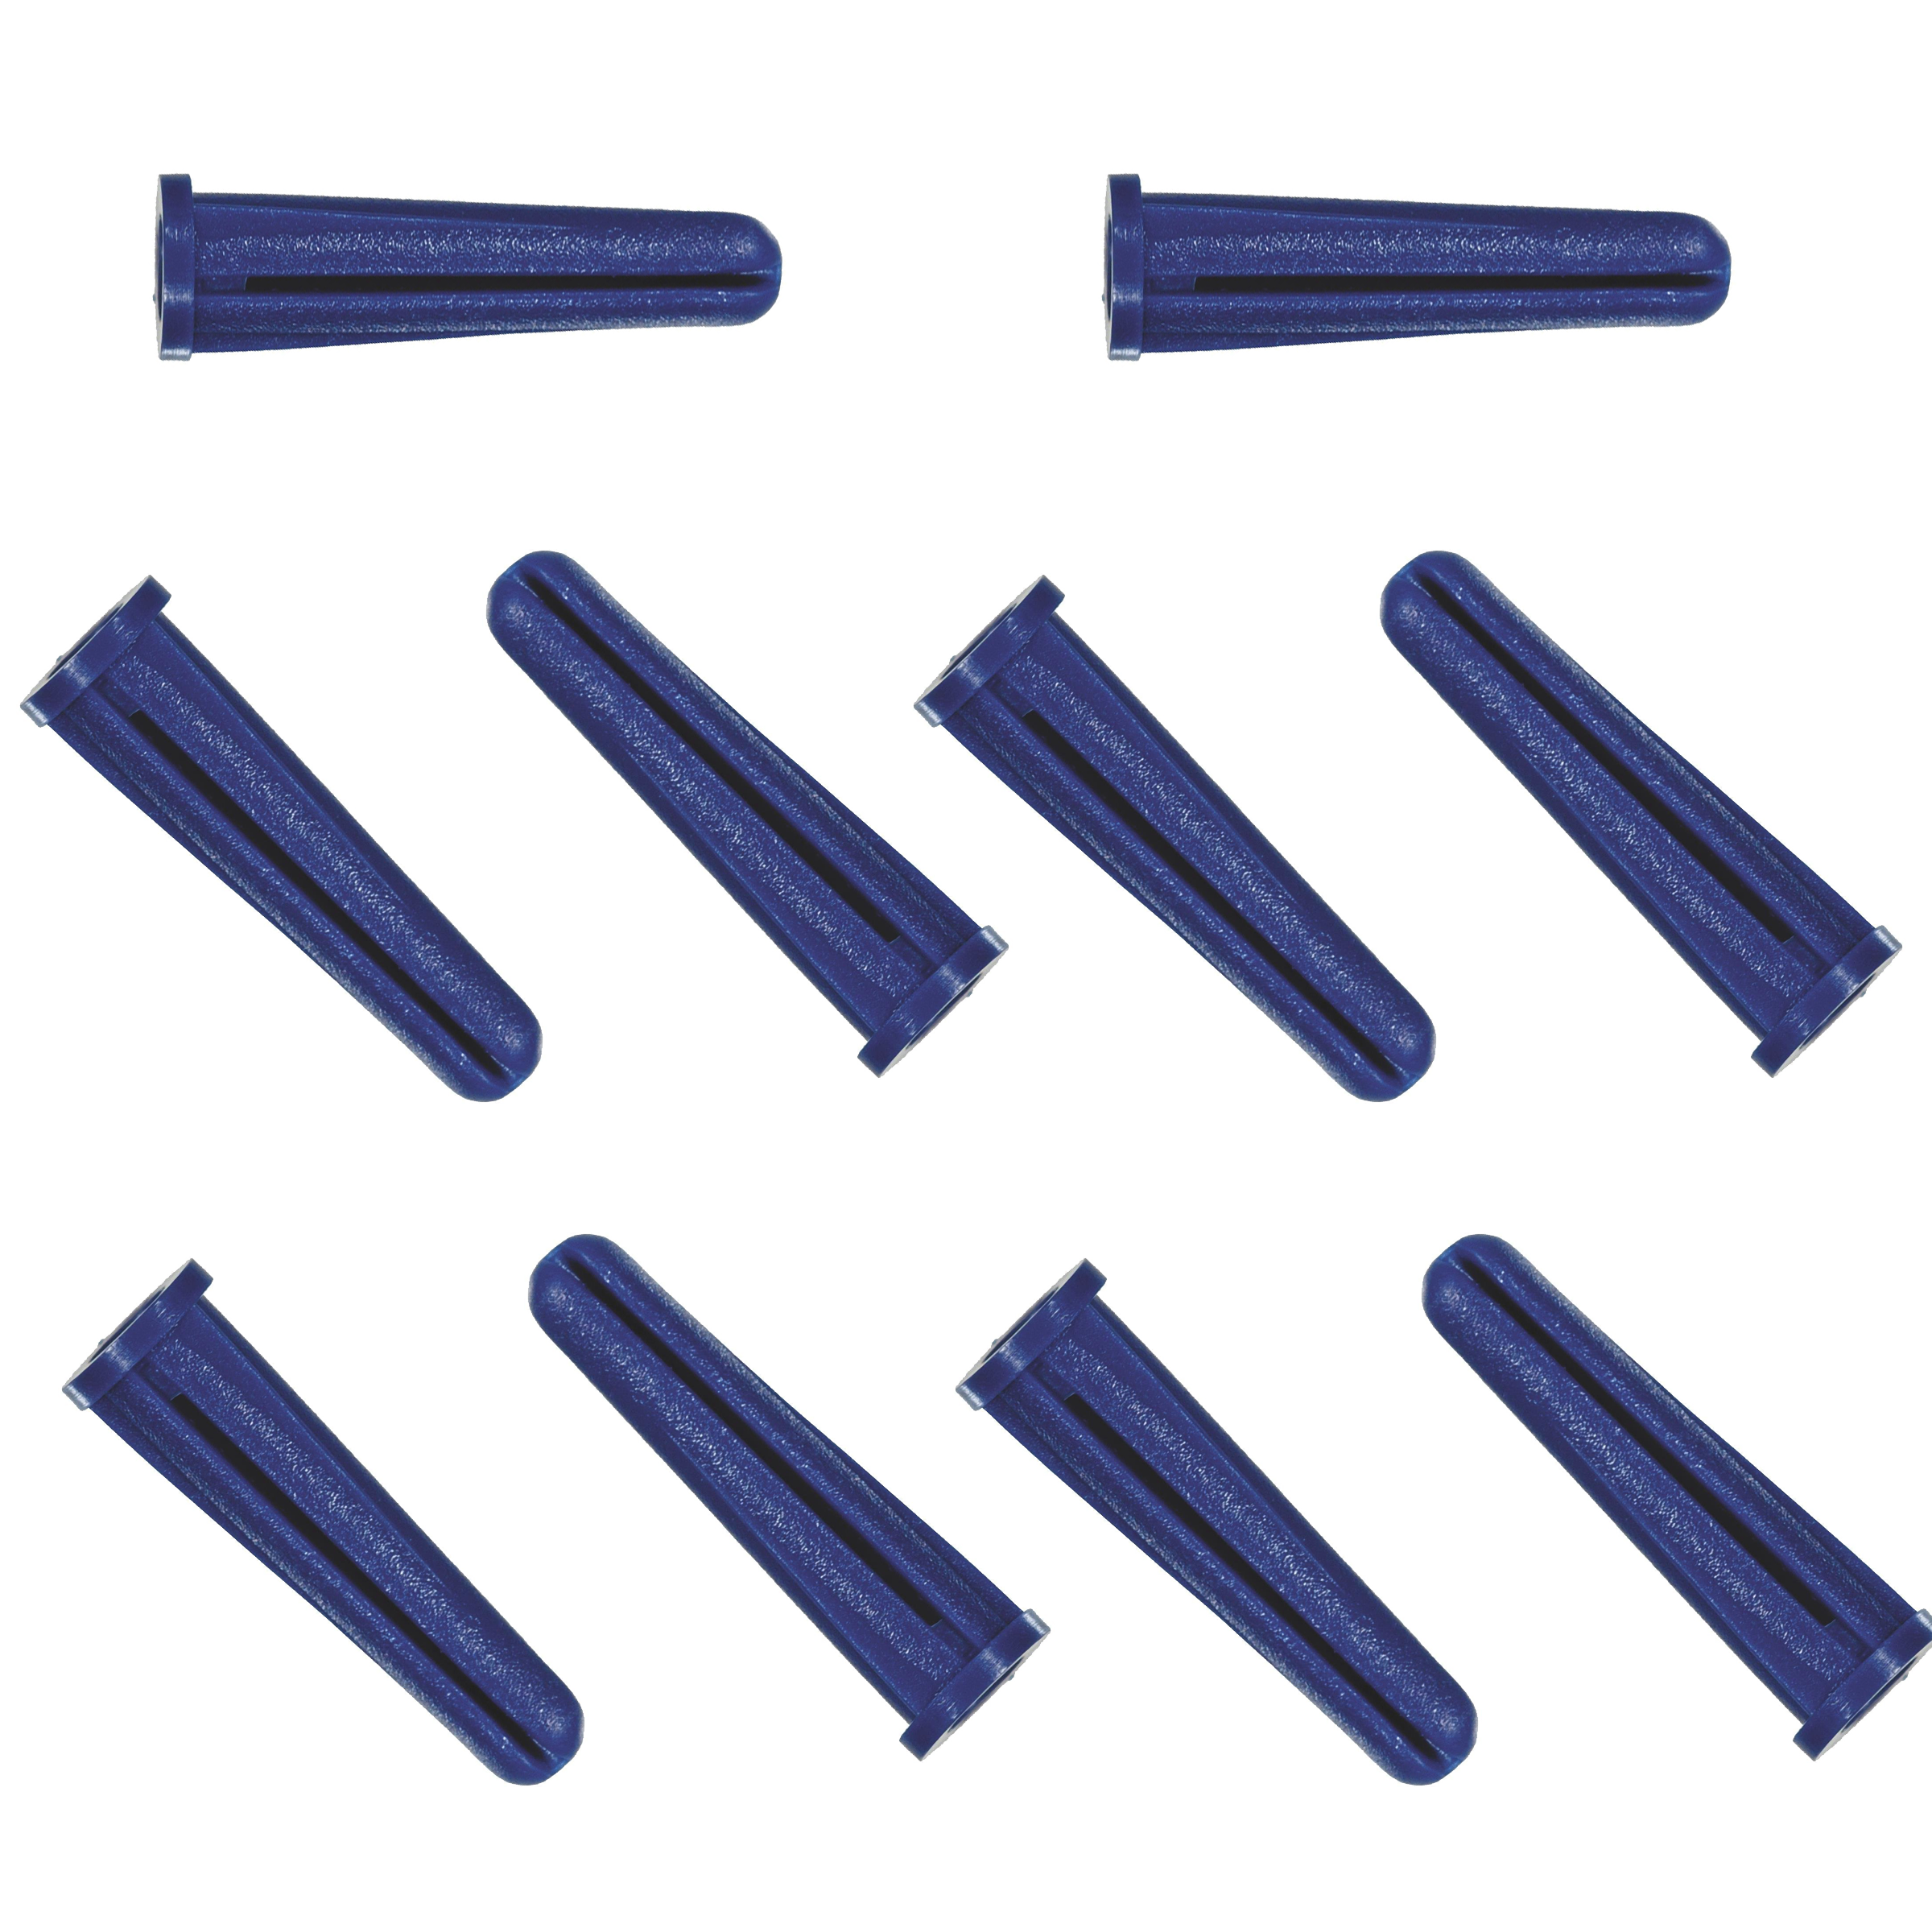 Plastic Screw Anchors- 10-12 x 1" – Pack of 10